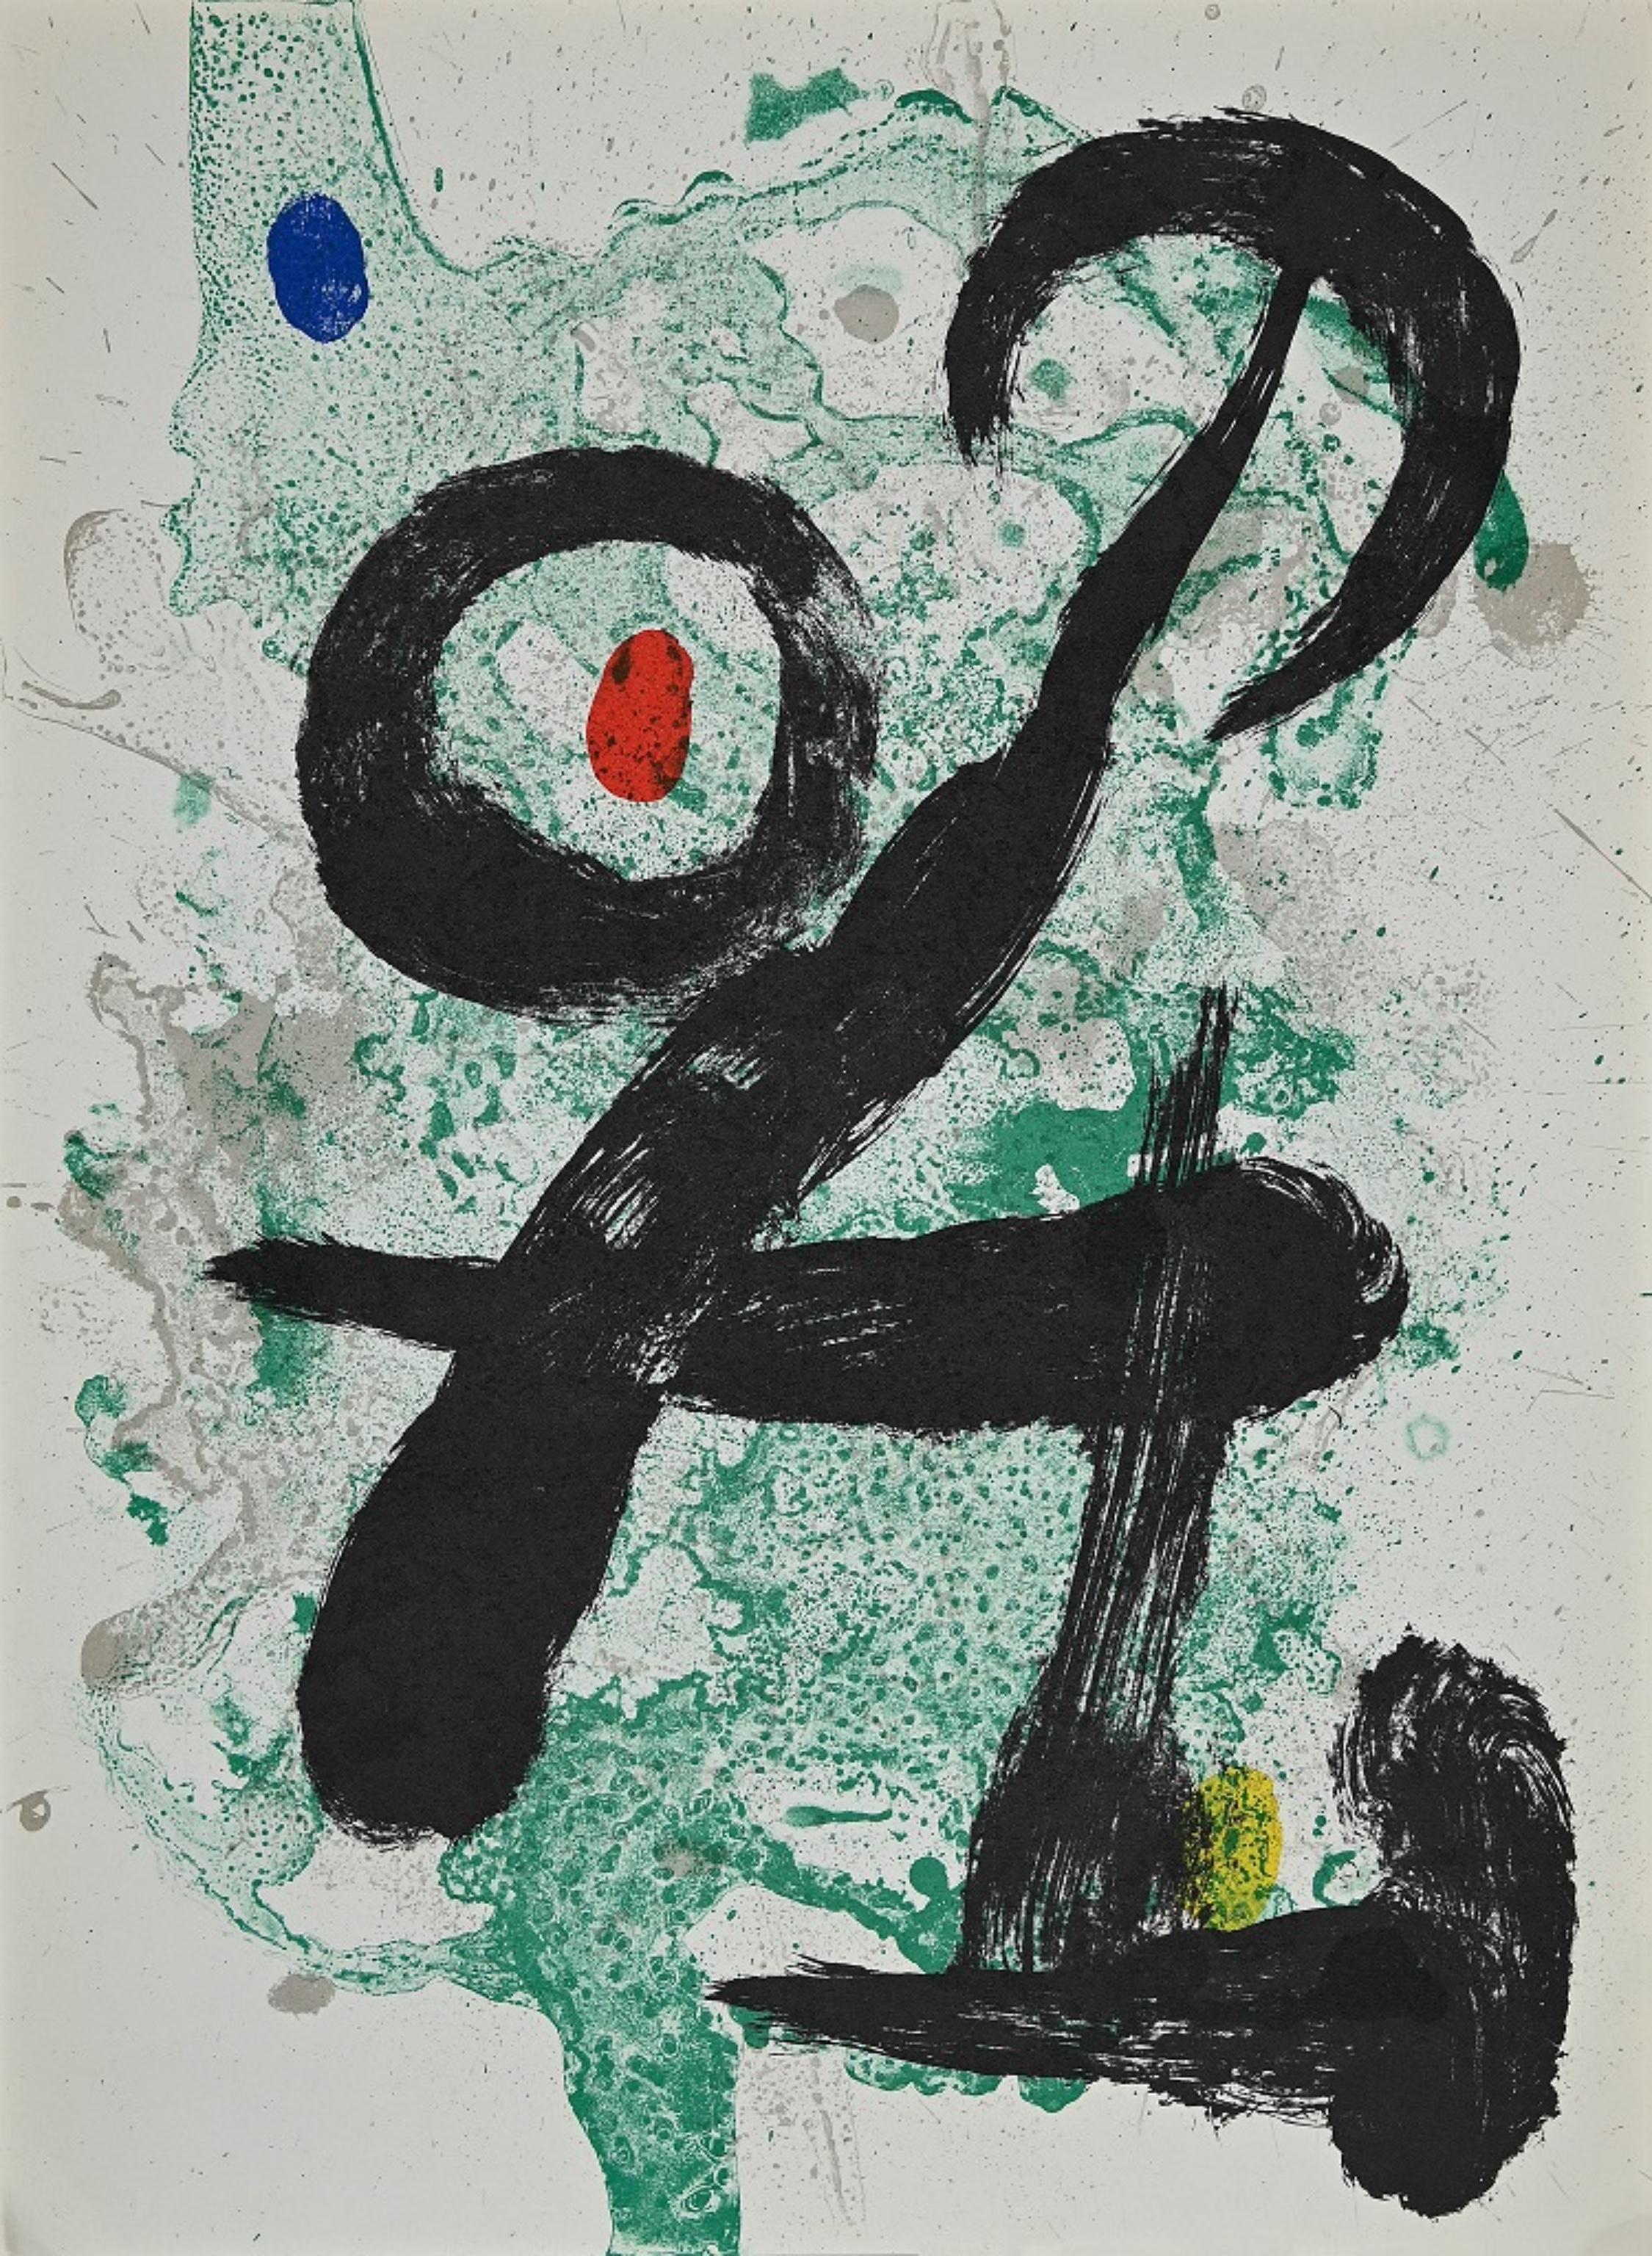 Joan Miró Abstract Print - Le Faune - Original Lithograph by Joan Mirò - 1963